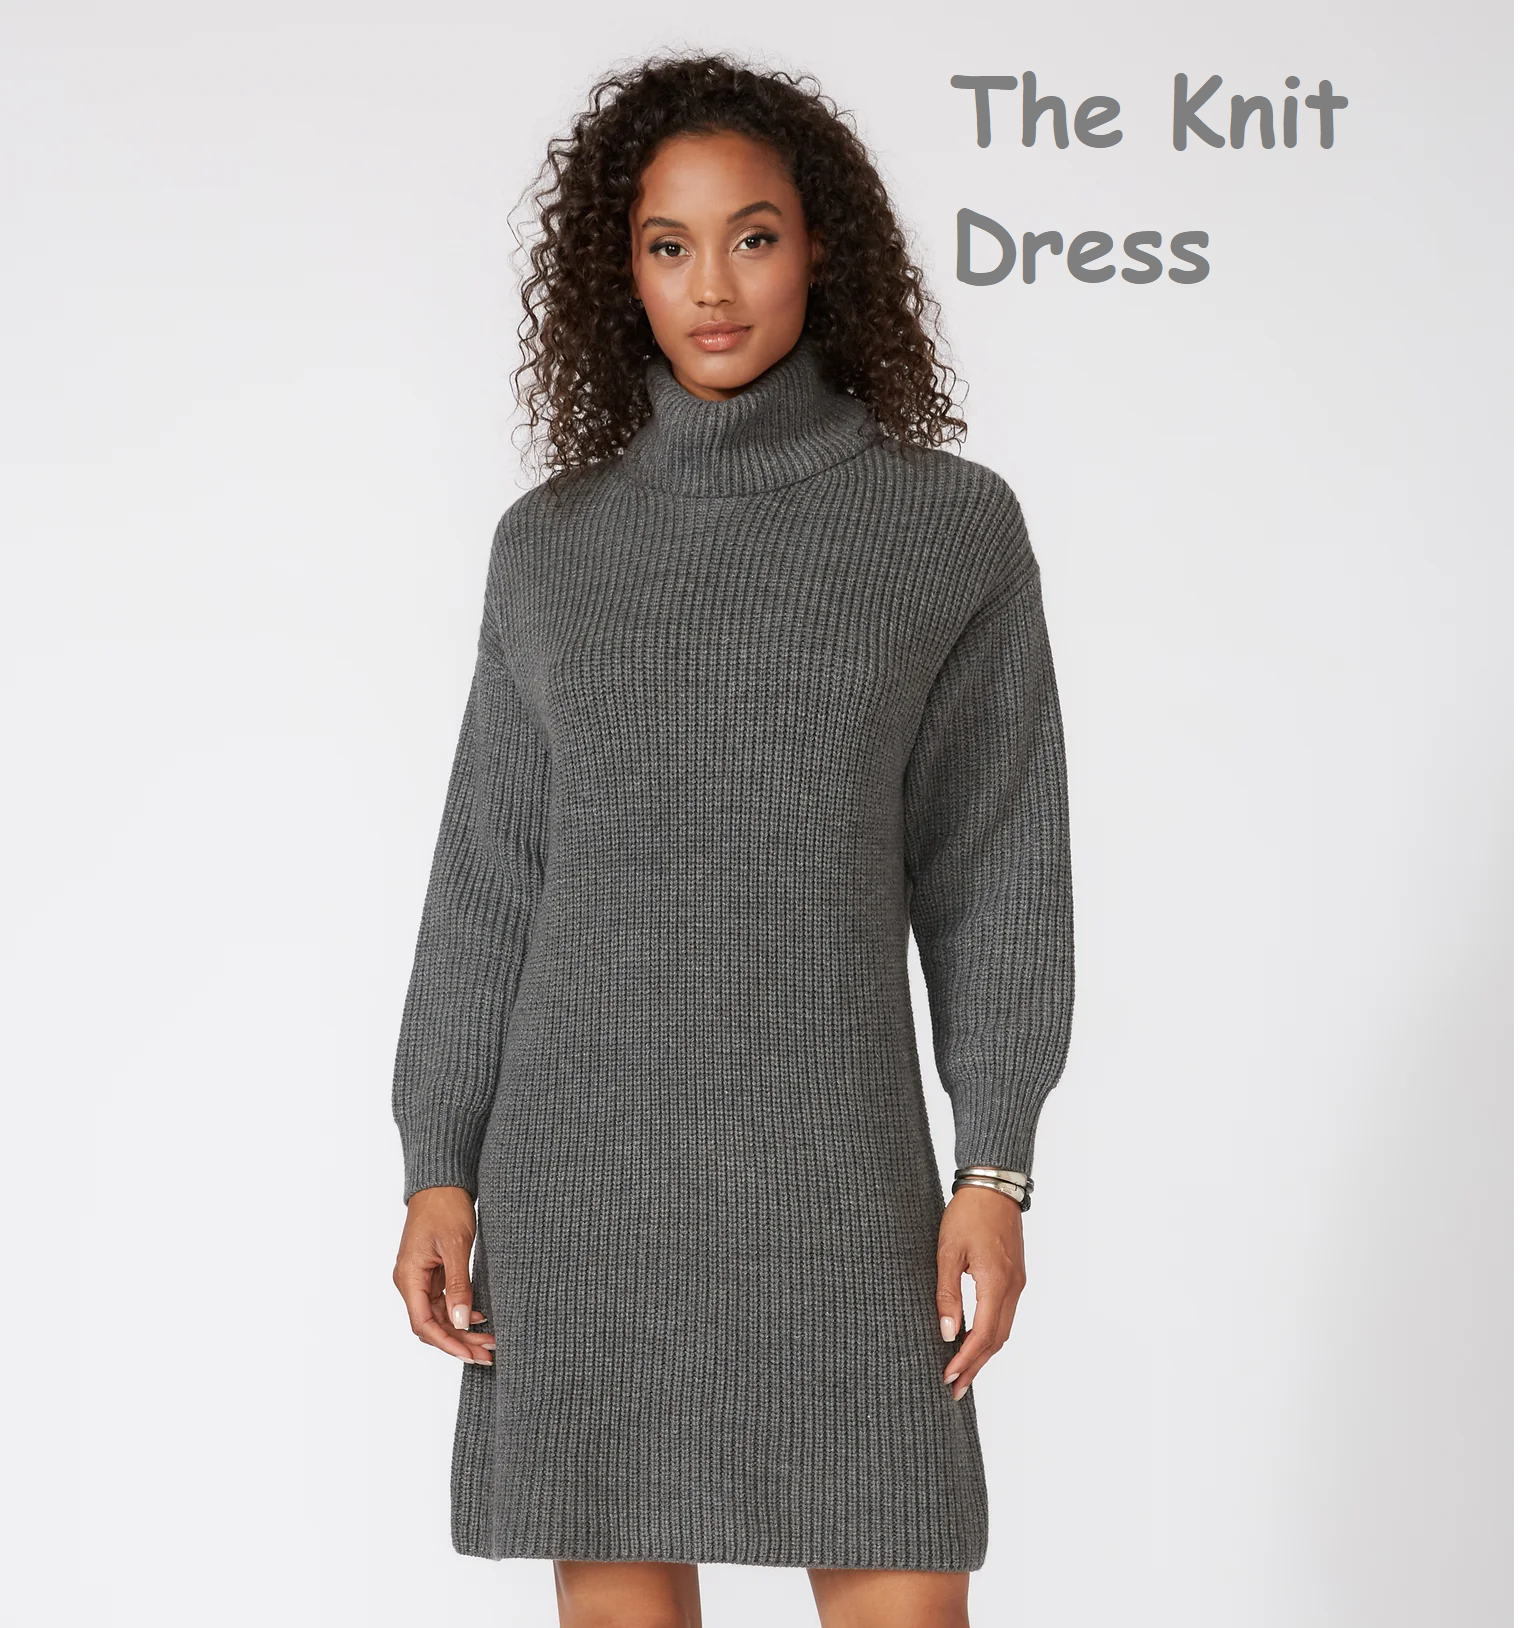 The knit dress